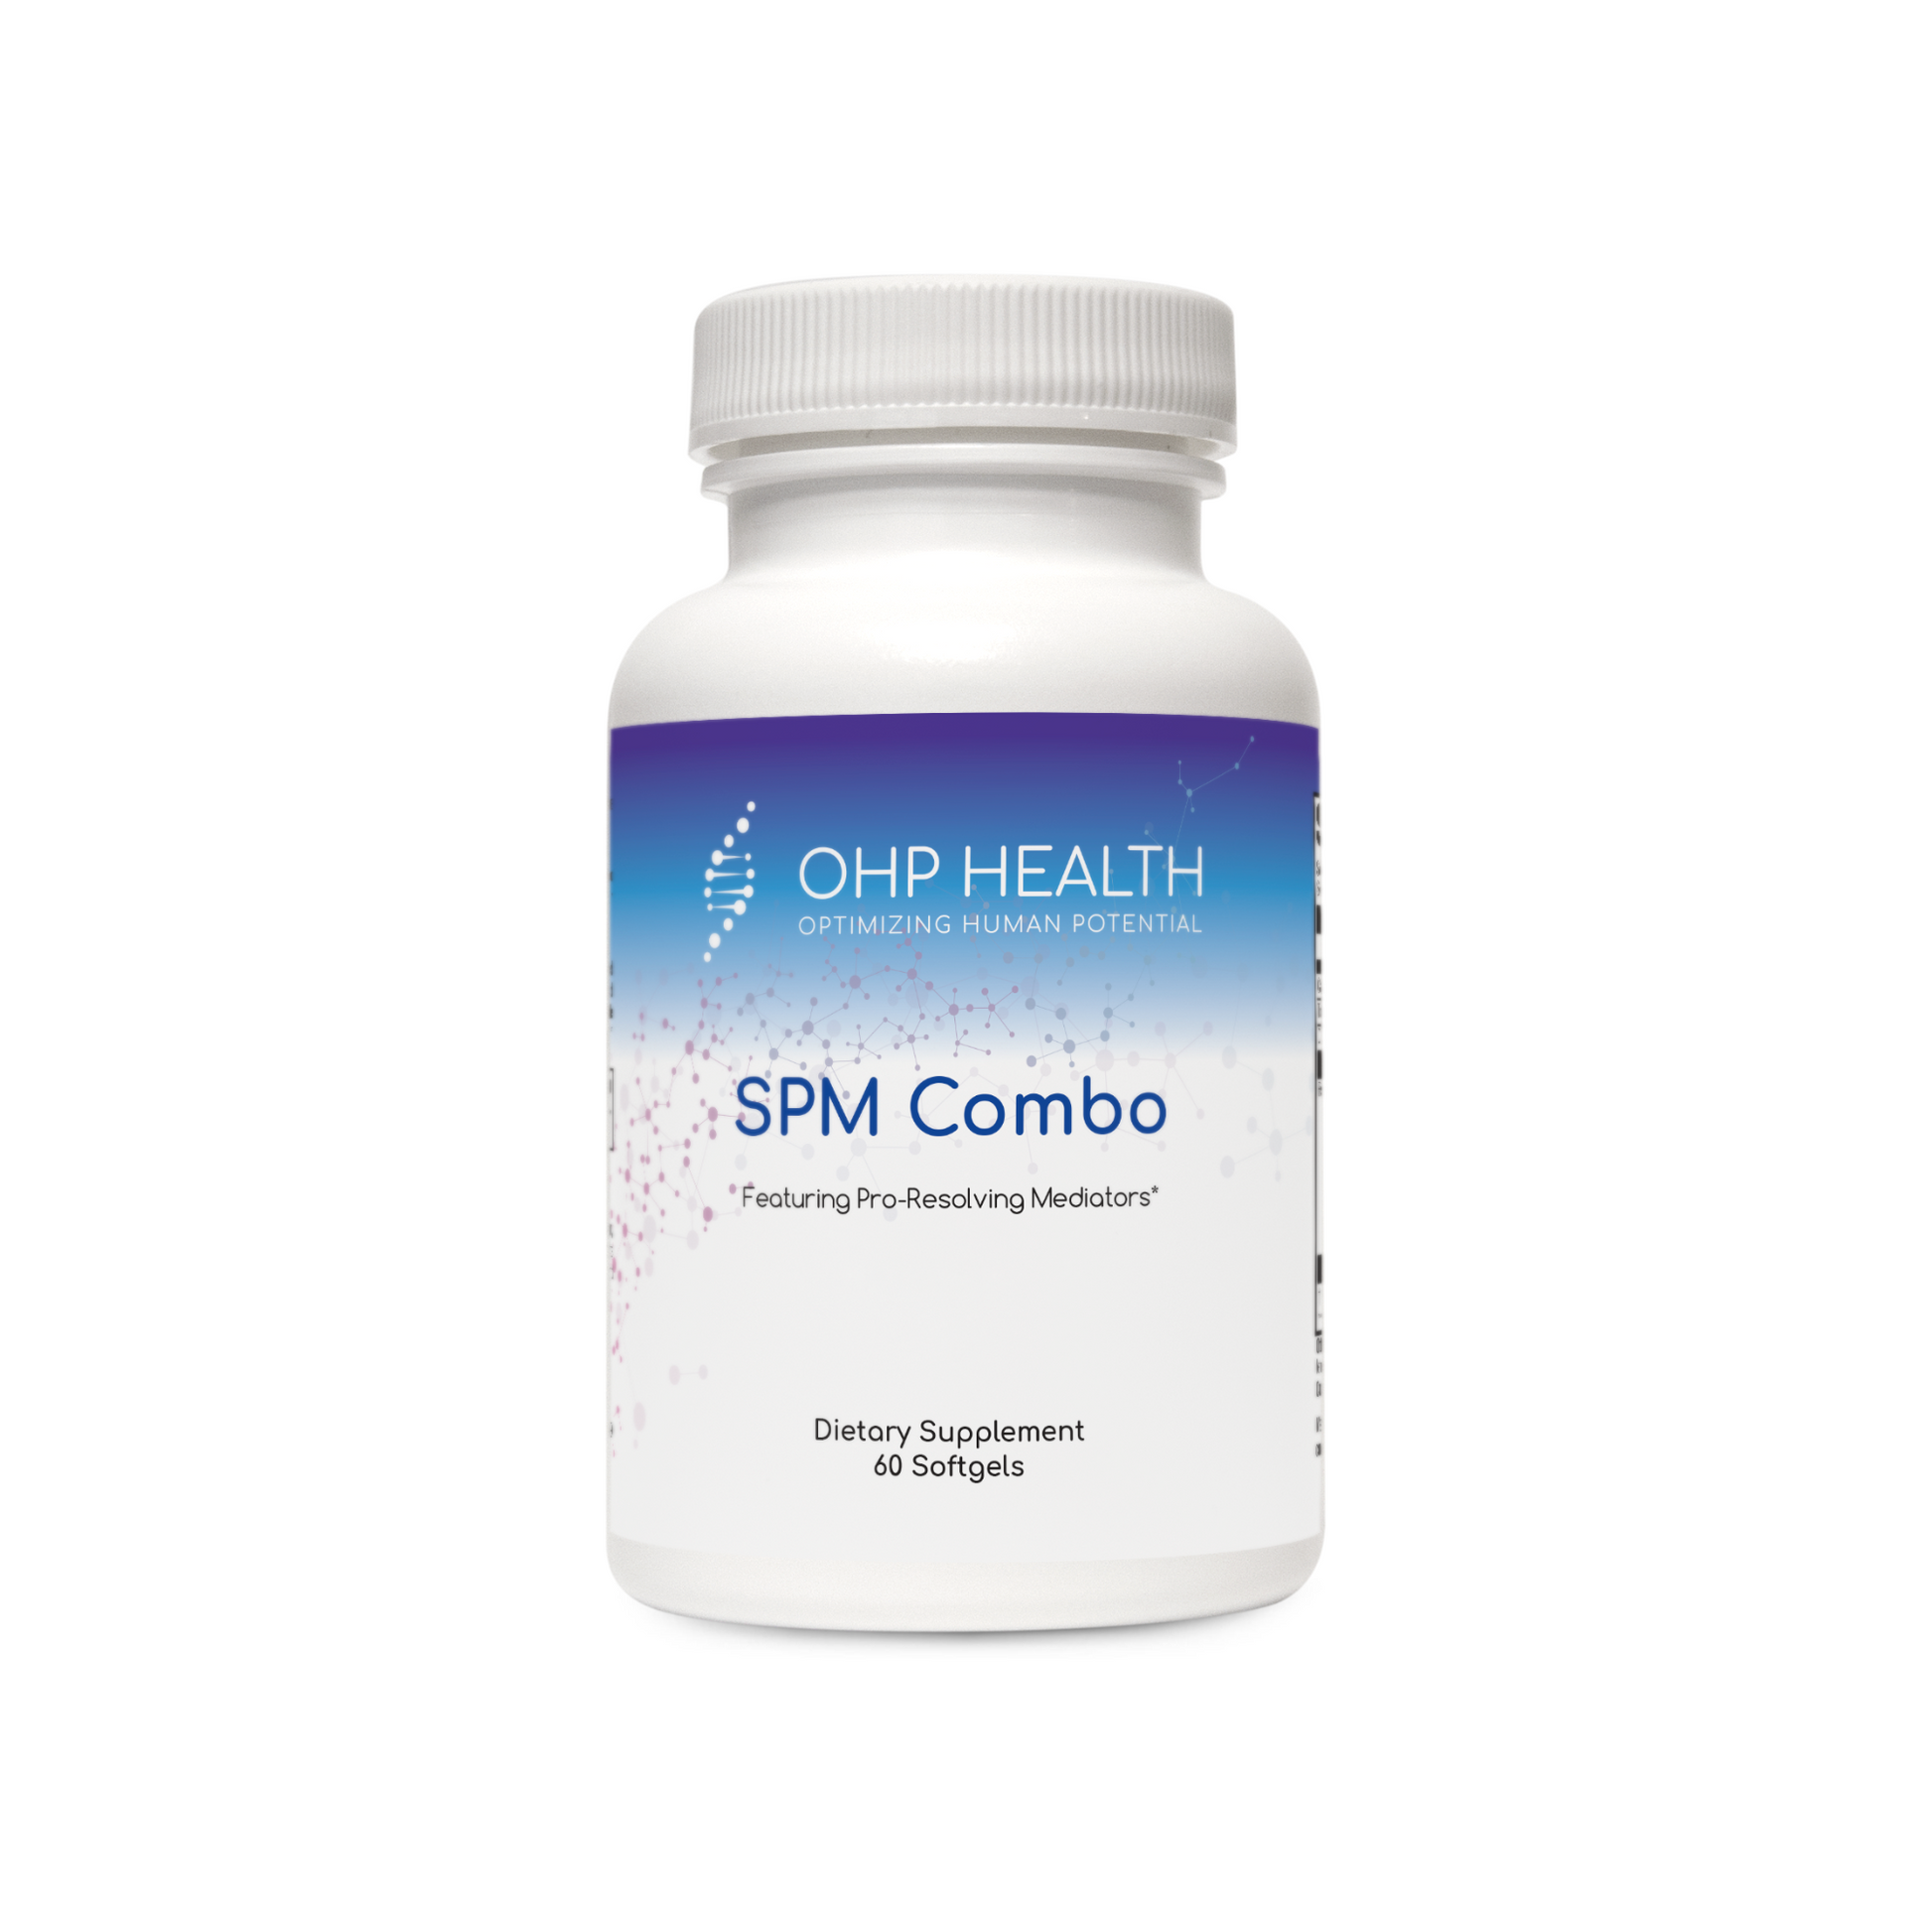 Bottle of SPM Combo Dietary Supplement Featuring Pro-resolving Mediators  60 softgels